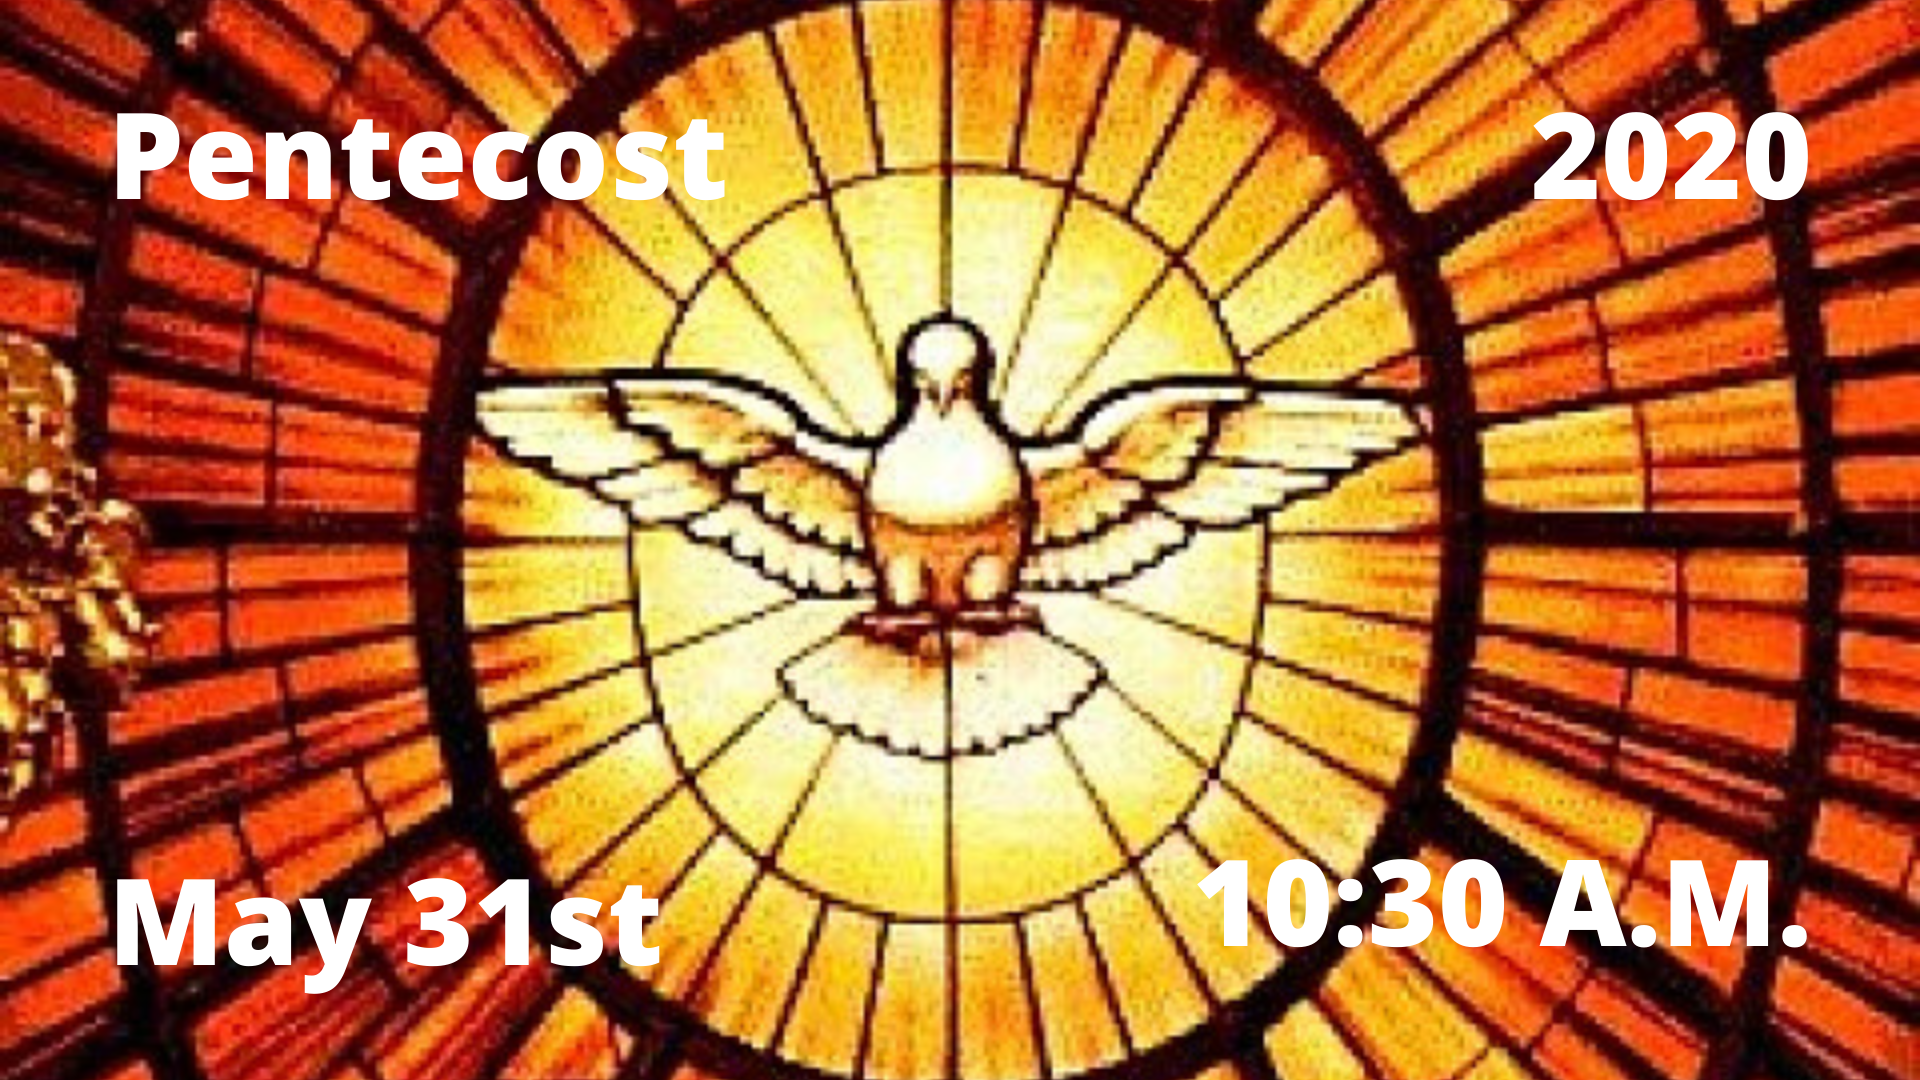 “Peter at Pentecost”